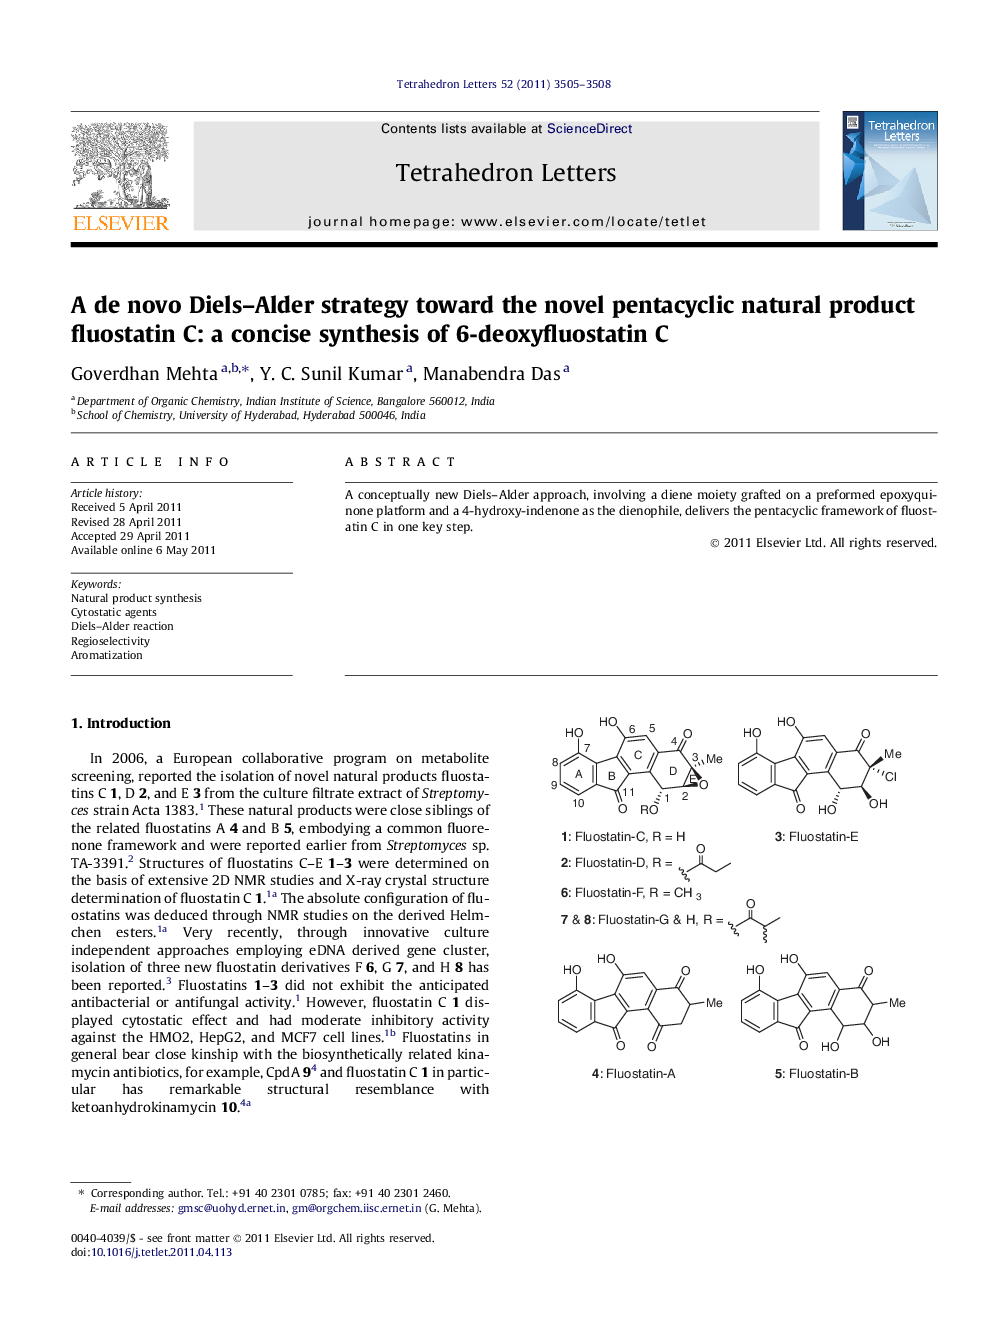 A de novo Diels–Alder strategy toward the novel pentacyclic natural product fluostatin C: a concise synthesis of 6-deoxyfluostatin C